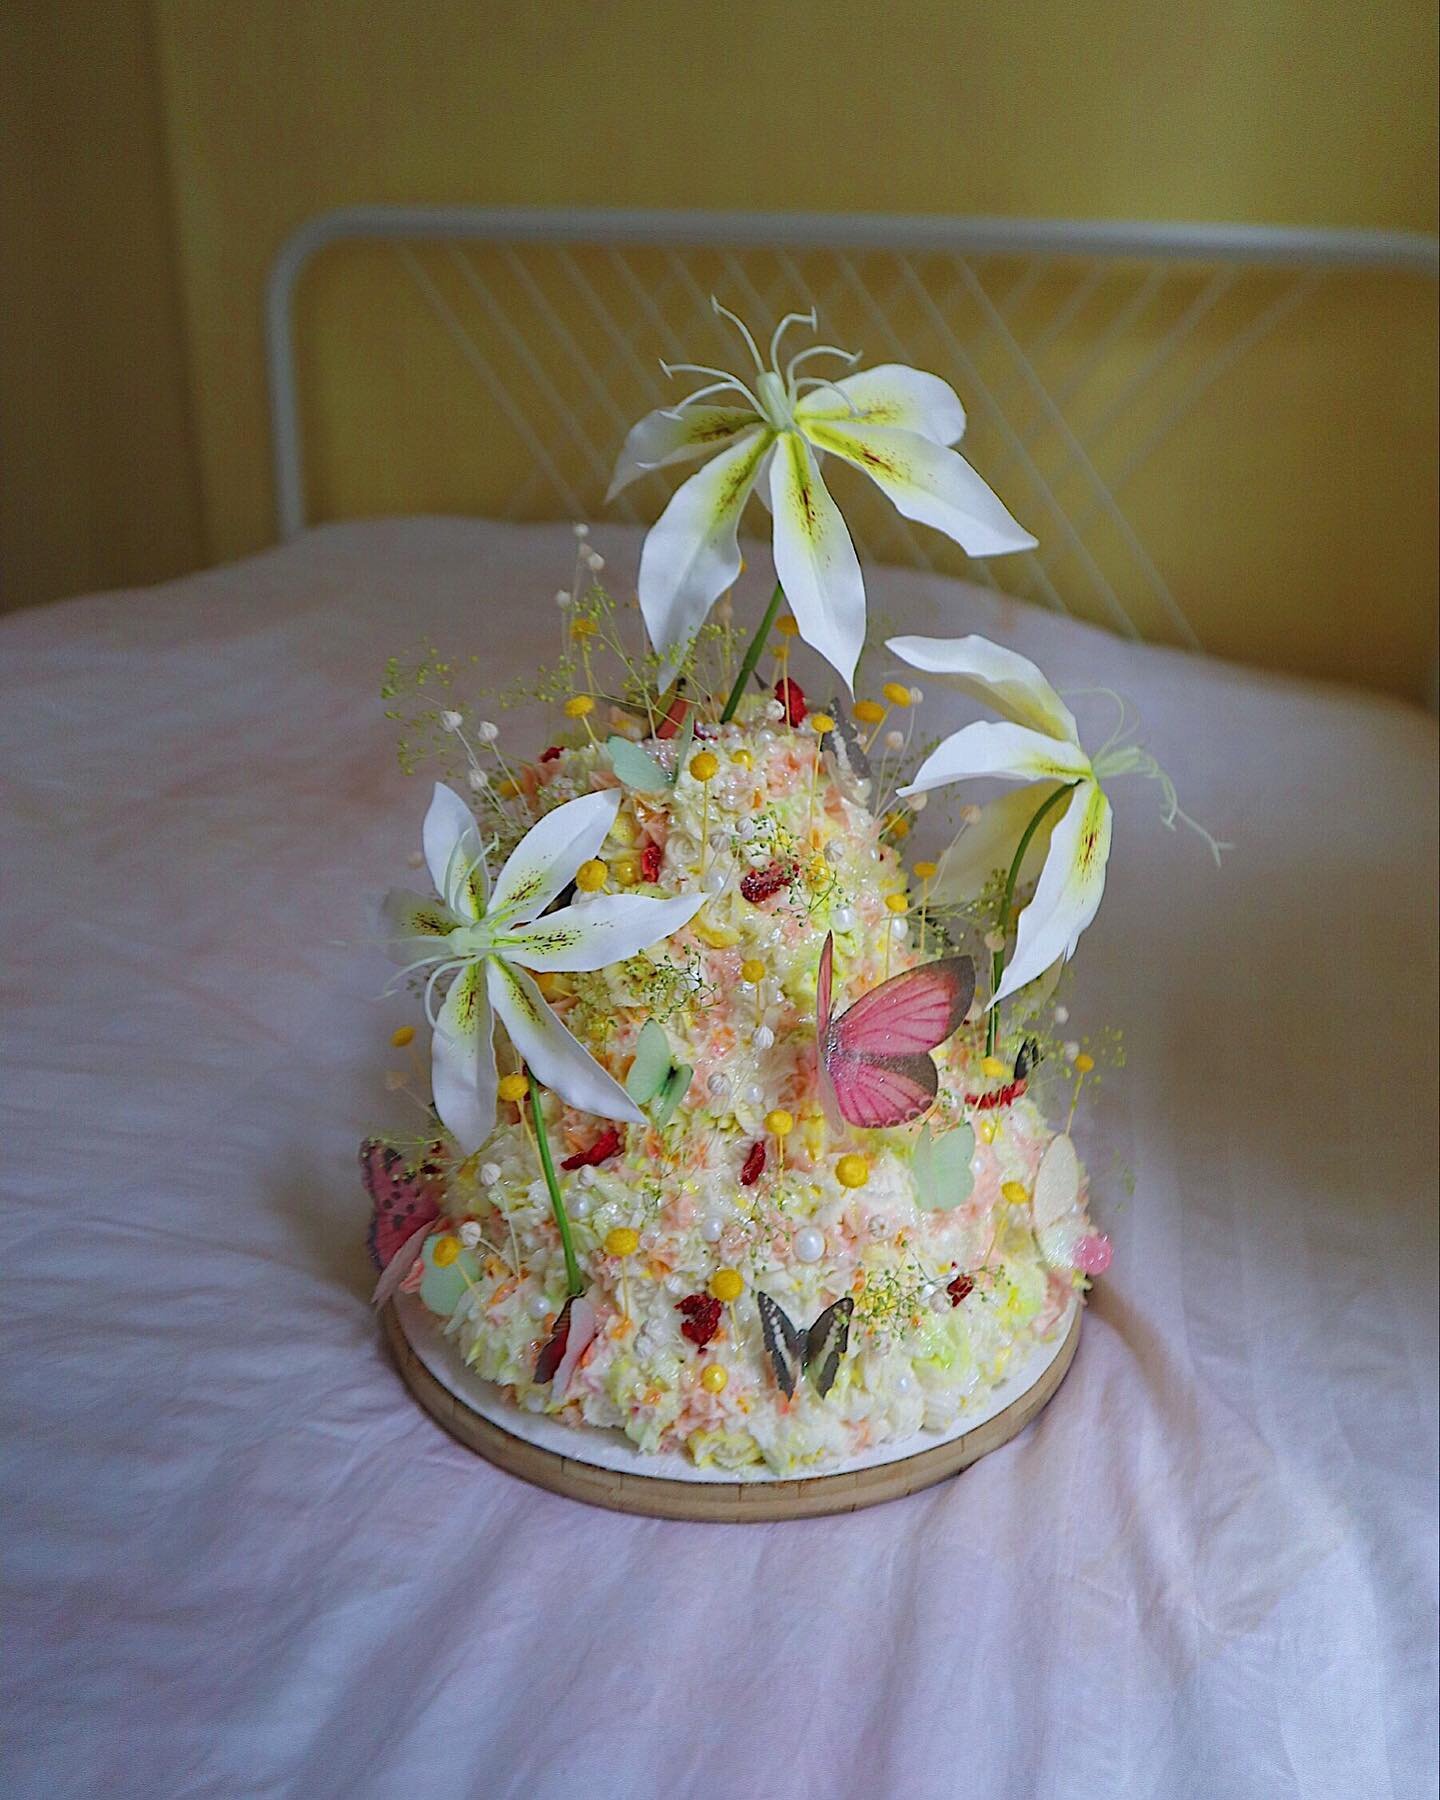 𝓕𝓾𝓷𝓯𝓮𝓽𝓽𝓲 𝓪𝓷𝓭 𝓥𝓪𝓷𝓲𝓵𝓵𝓪💐 for a ♋️ queen! 

#cake #cakedecorating #cakes #birthdaycake #chocolate #food #dessert #cakesofinstagram #birthday #cakedesign #instafood #baking #foodporn #yummy #cakestagram #homemade #love #sweet #instacake